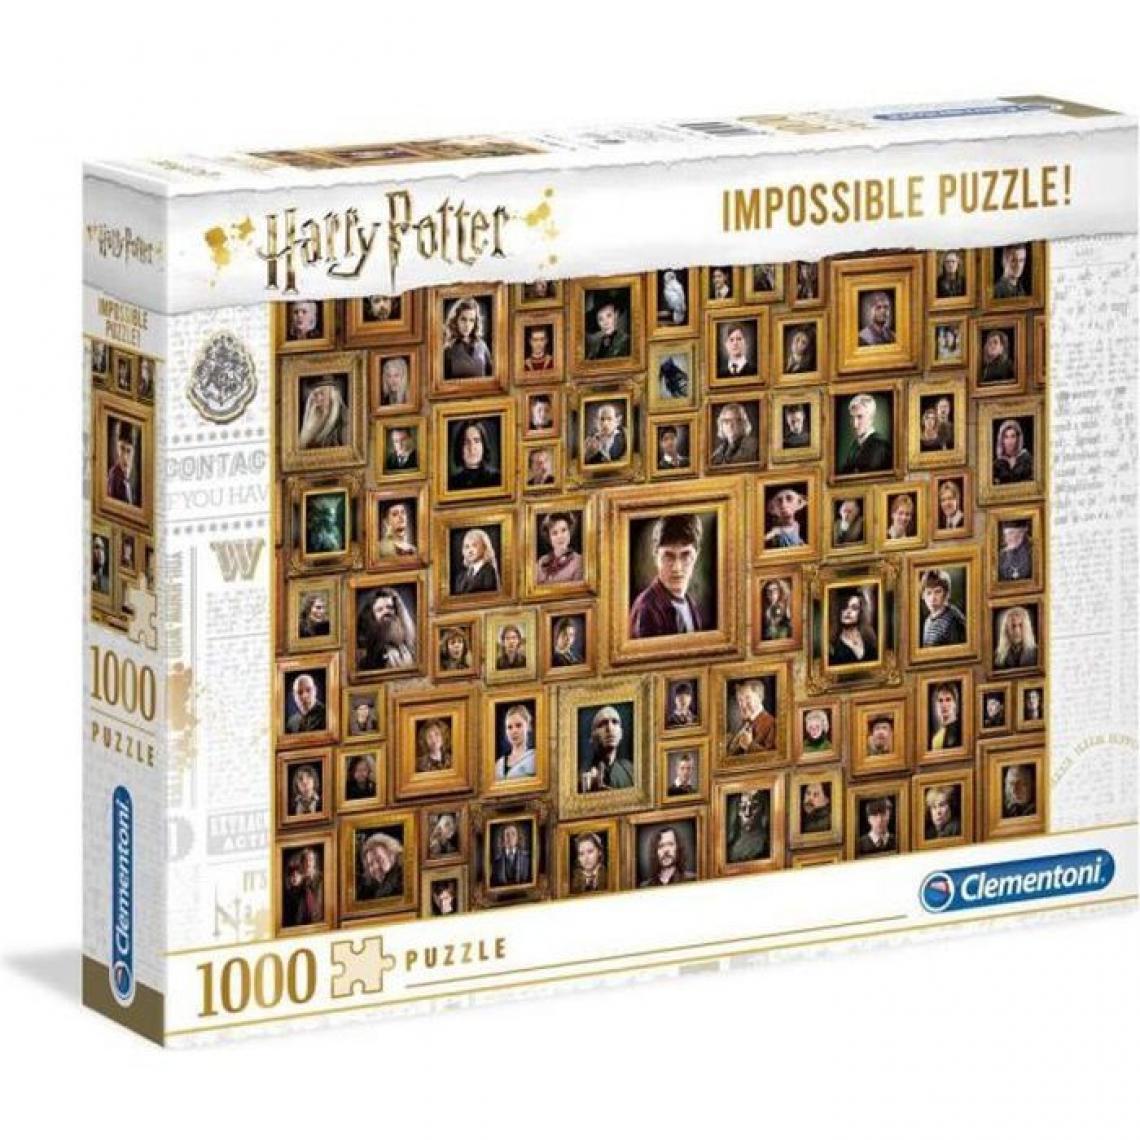 Clementoni - PUZZLE Impossible 1000 pieces - Harry Potter - Animaux